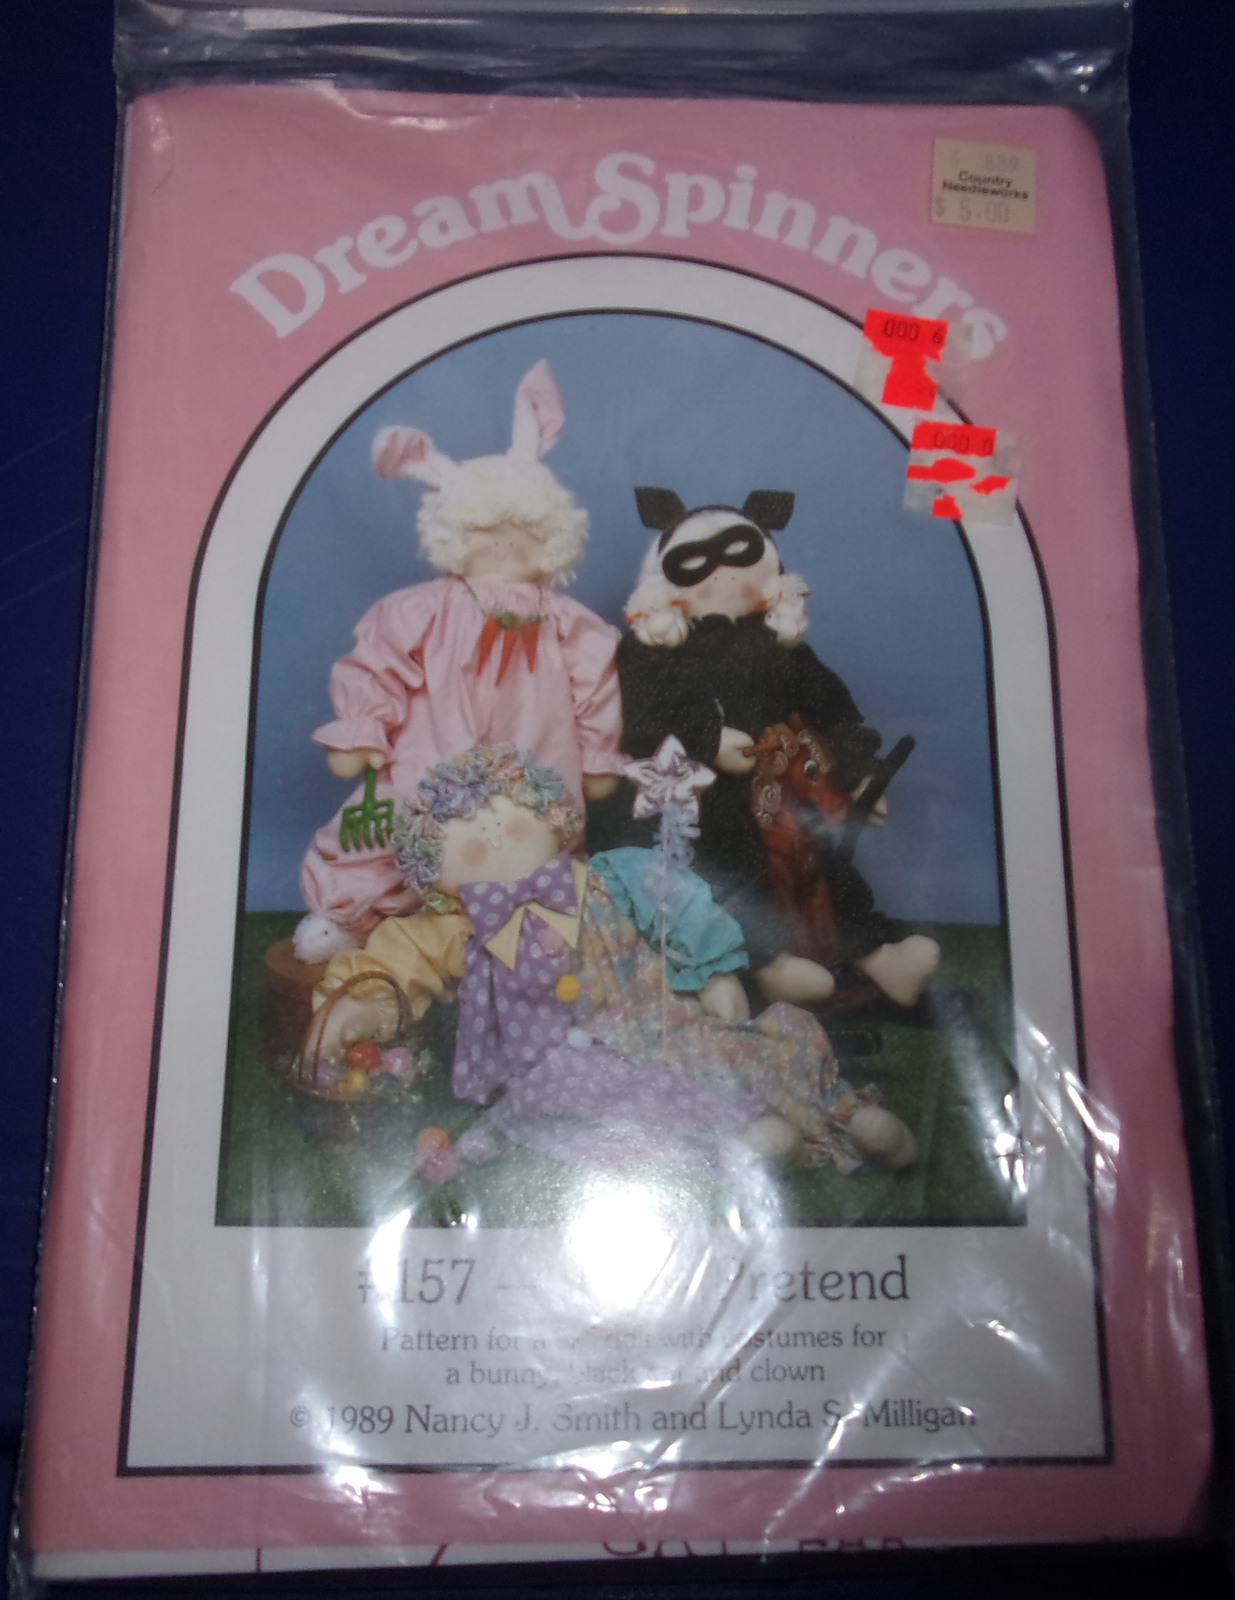 Dream Spinner Let’s Pretend 32” Doll Costumes Bunny Black Cat Clown #157 1989 - $4.99